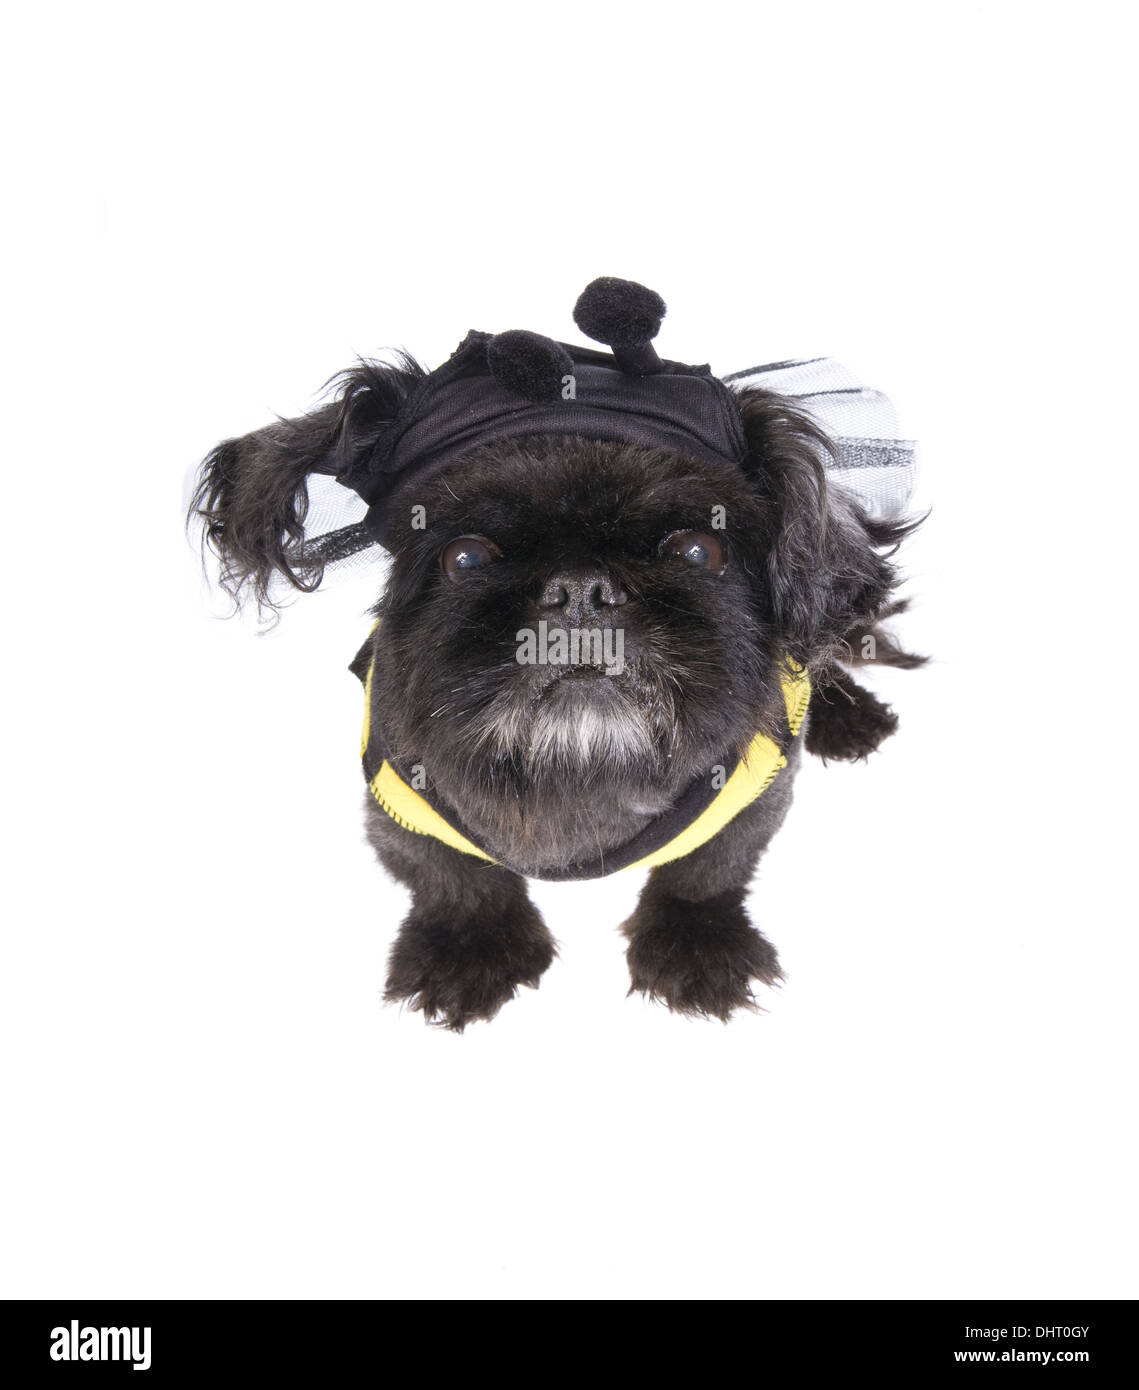 Black Pekingese dog dressed as a bumble bee isolated on white Stock Photo